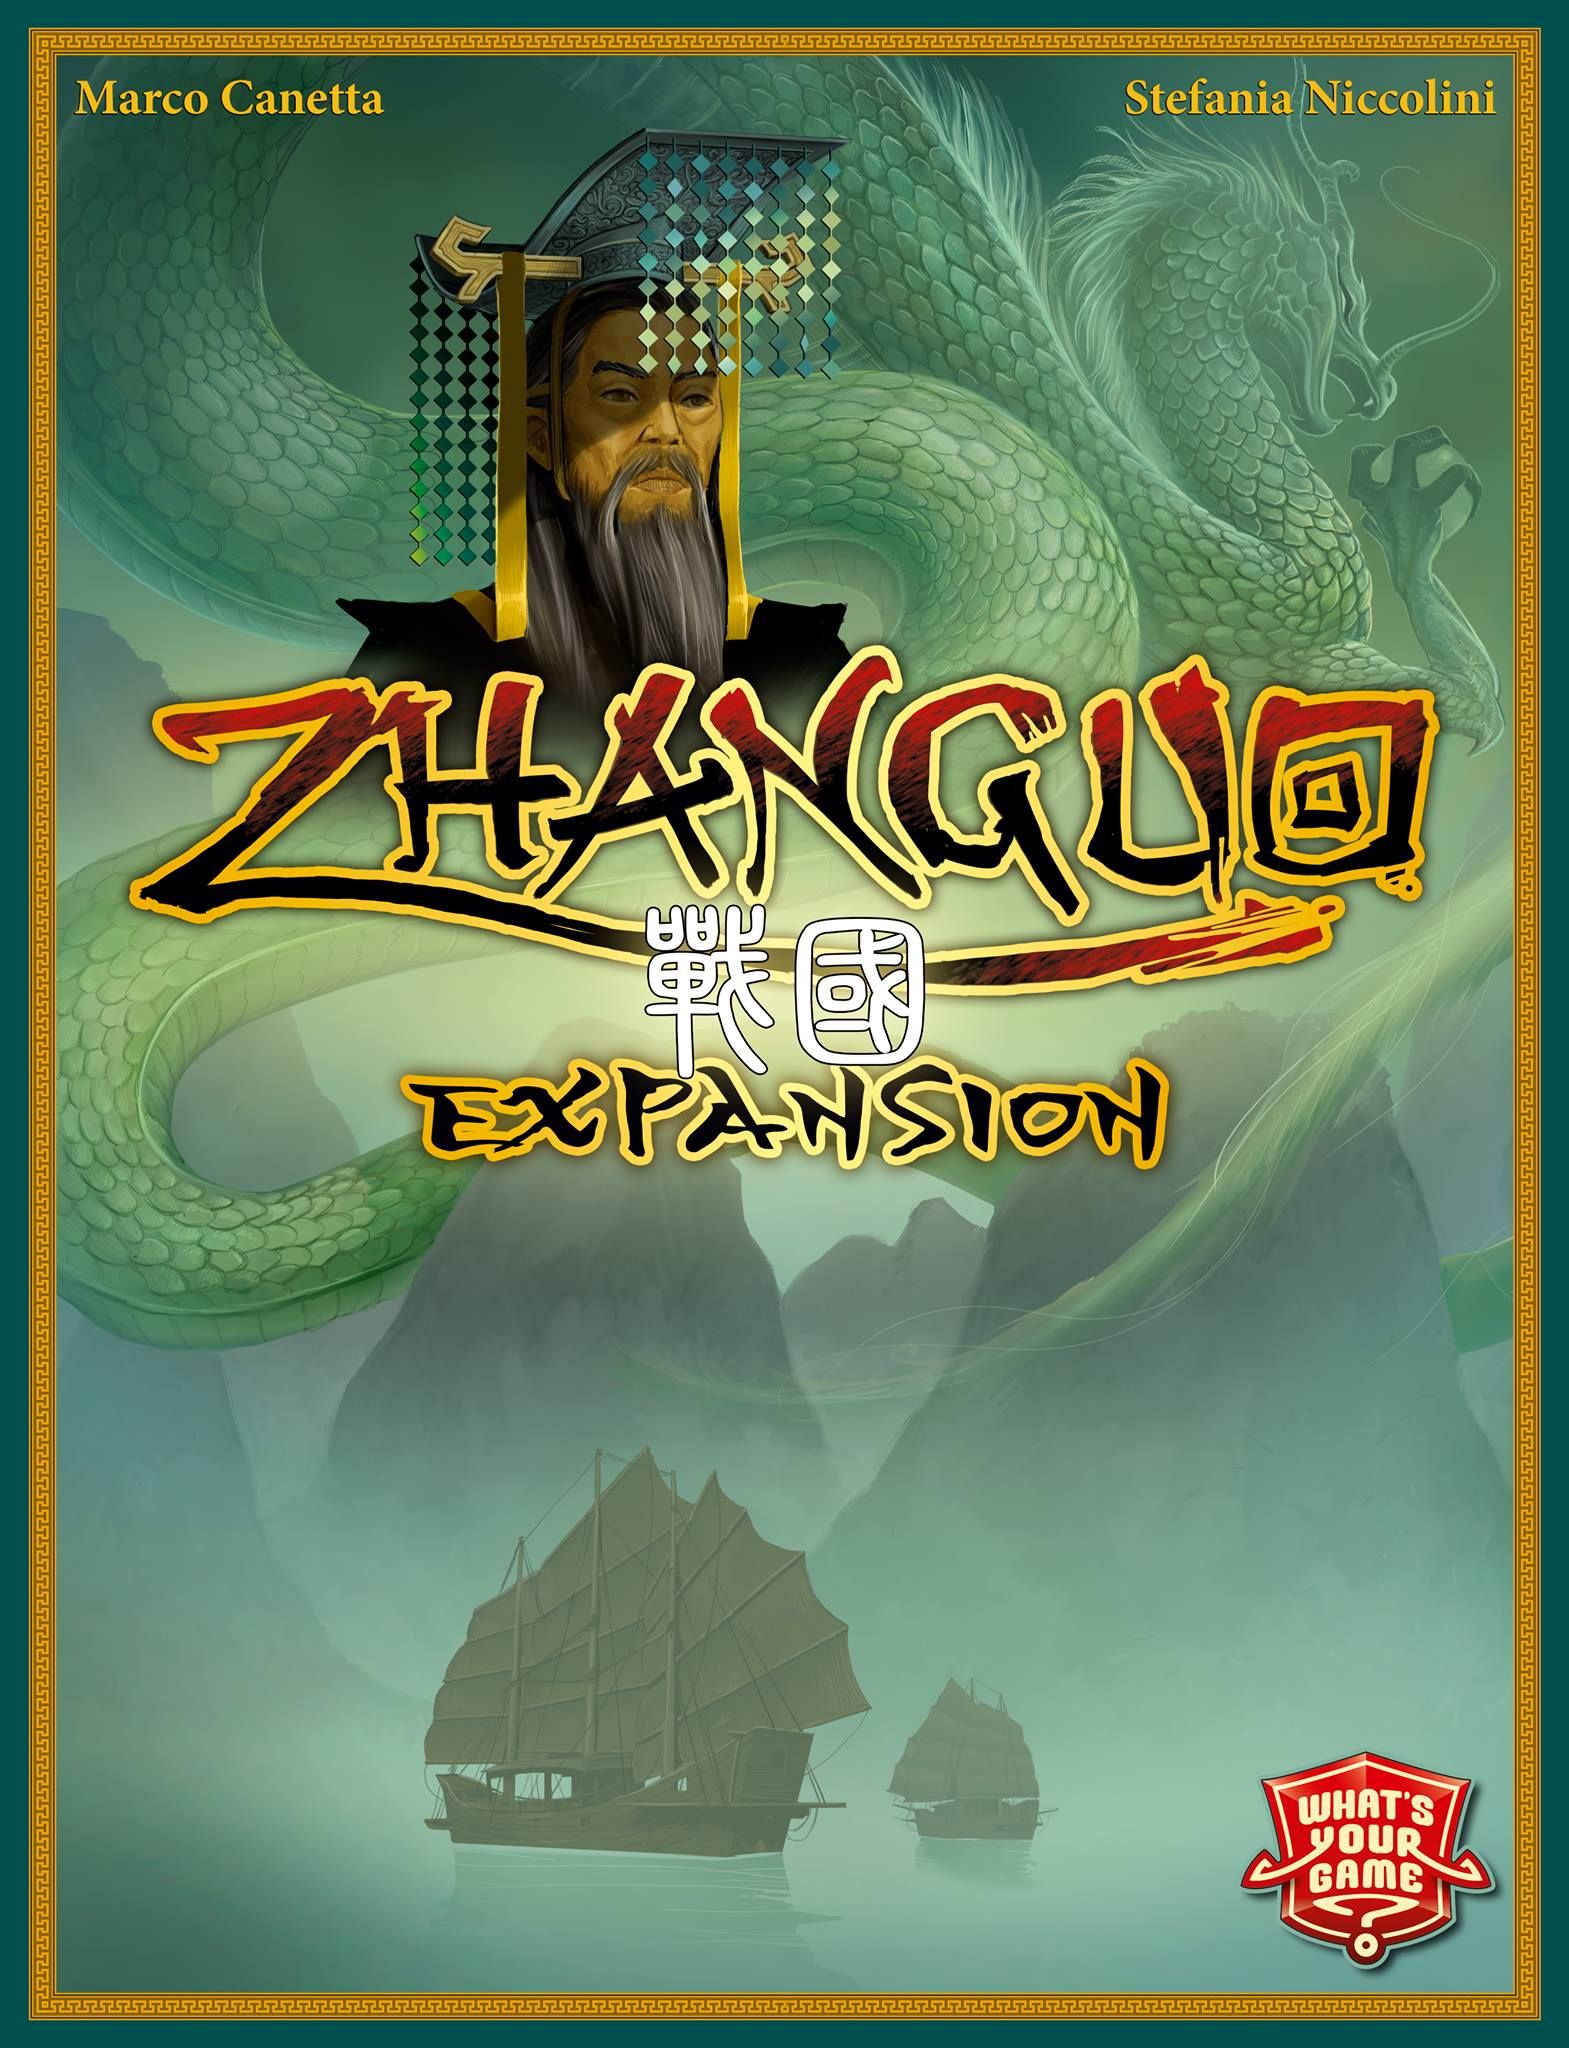 Zhanguo: Expansion